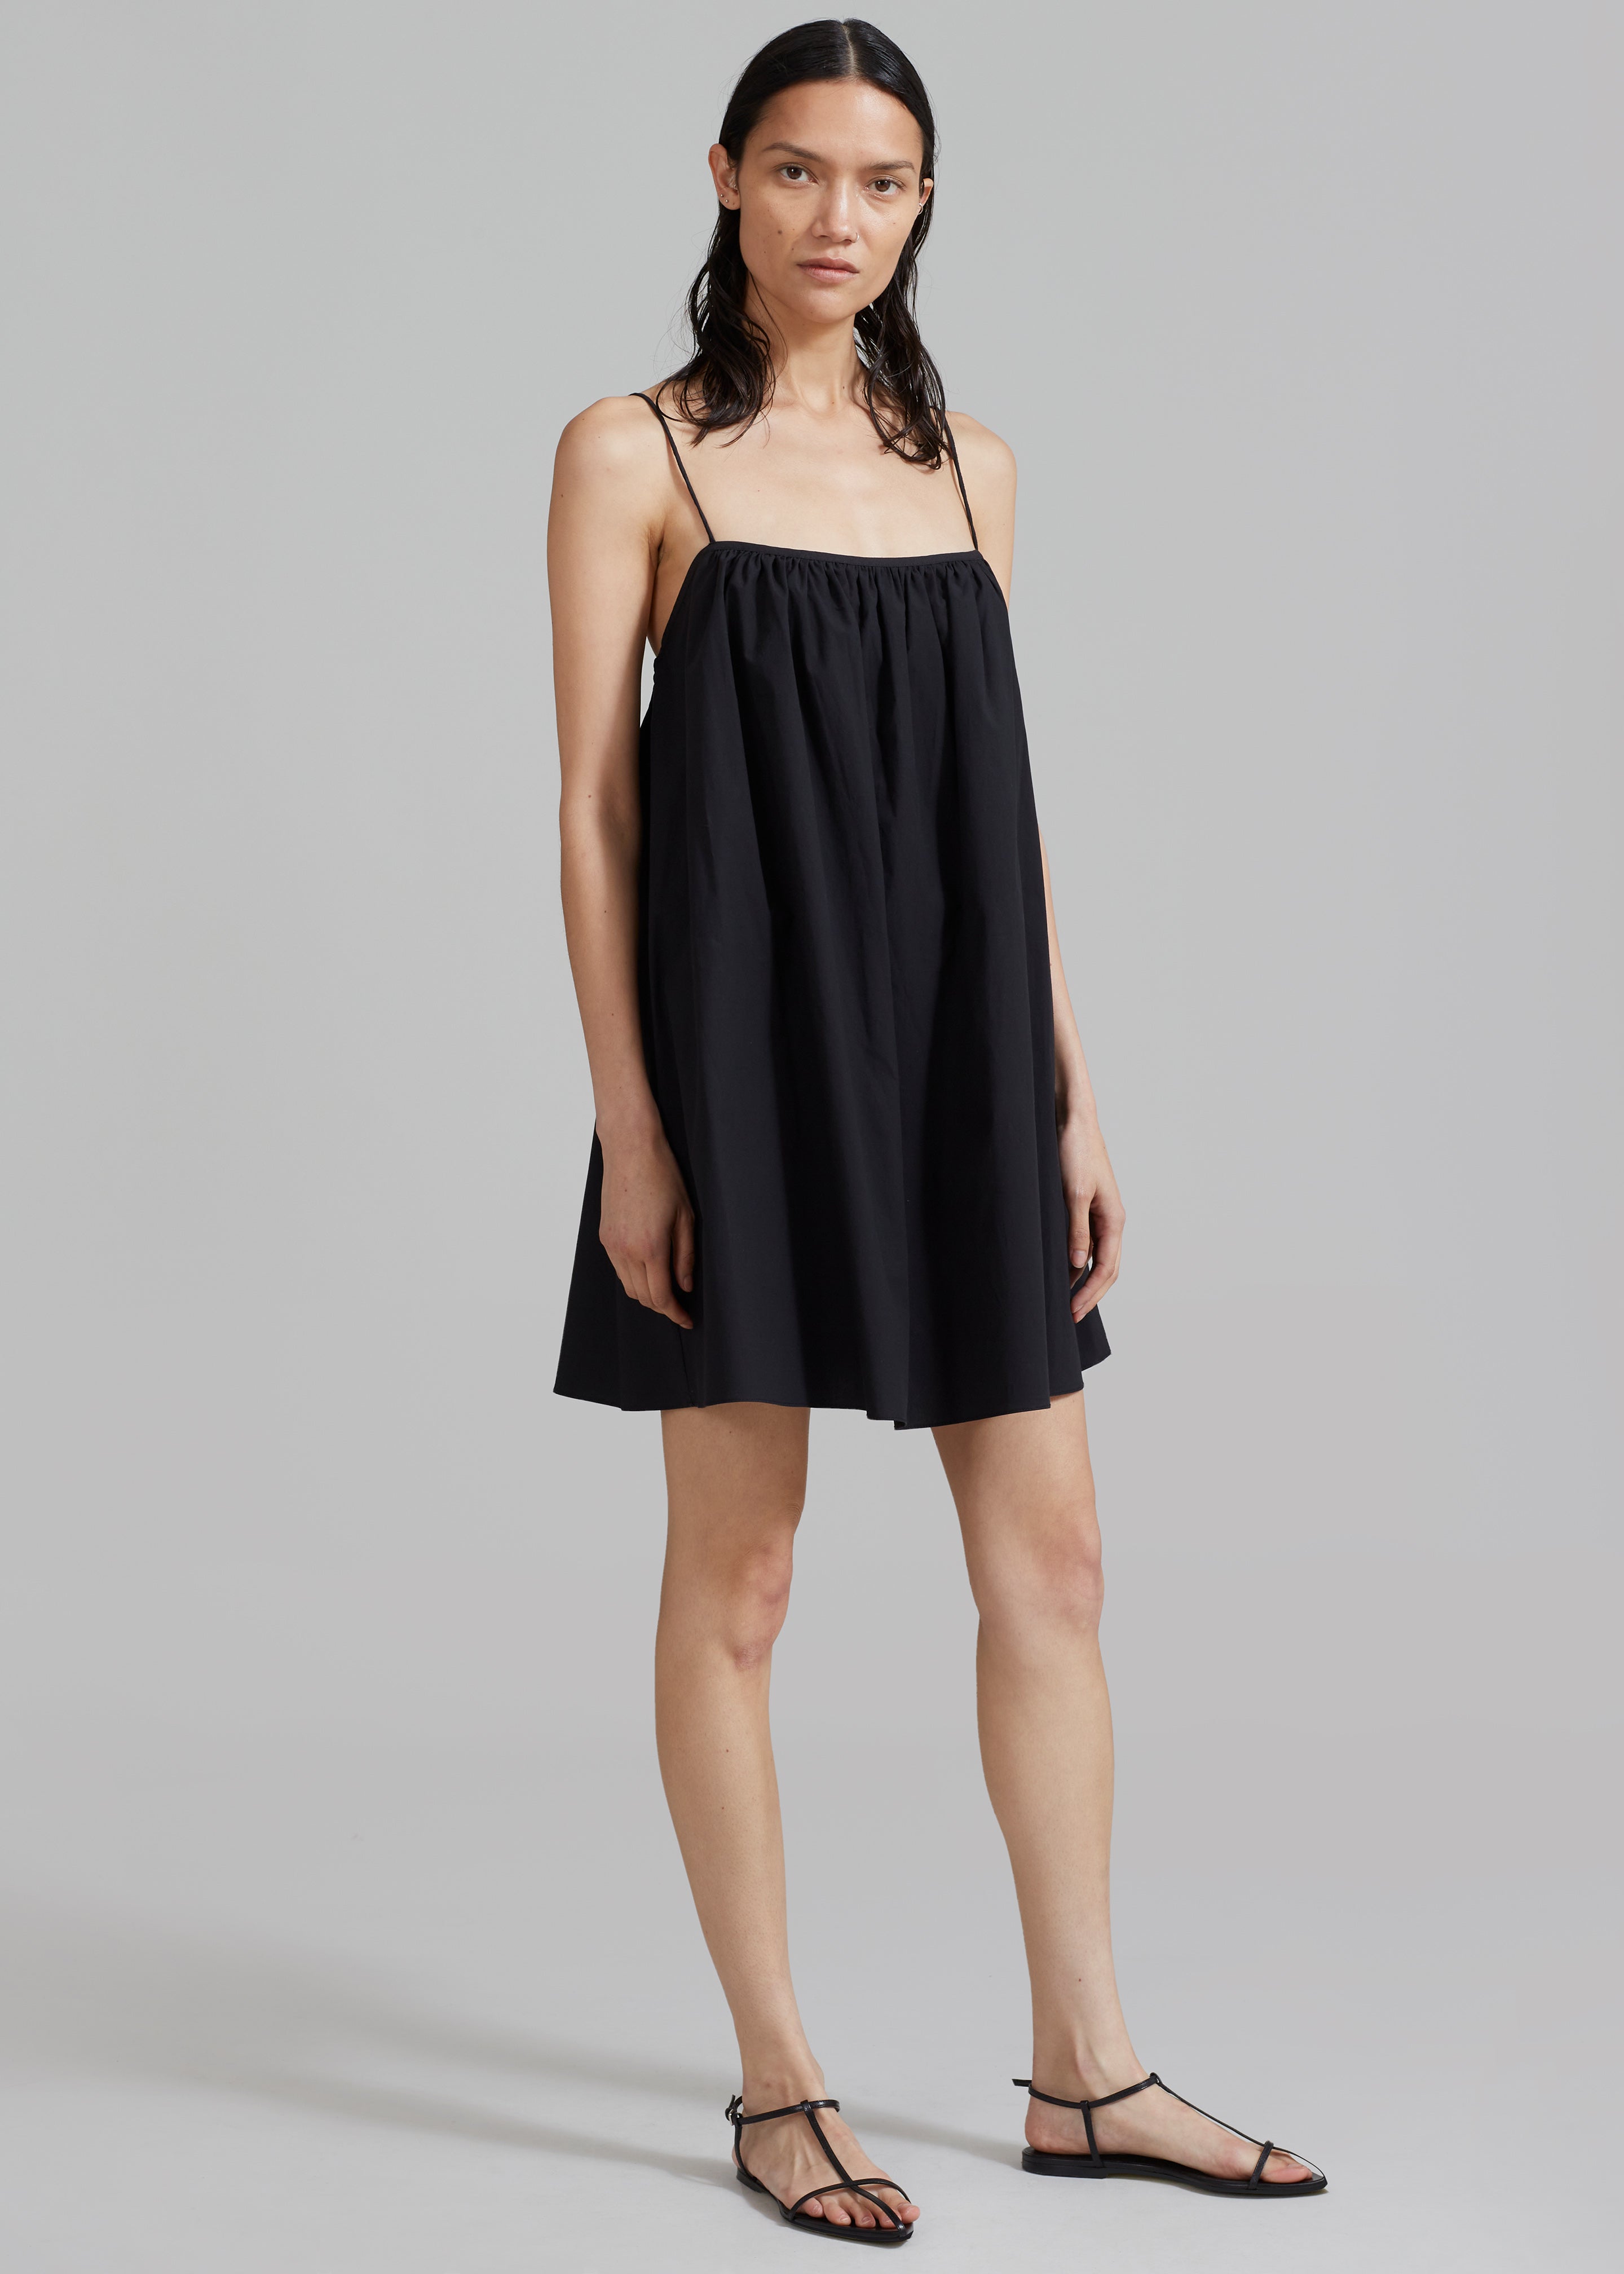 Matteau Voluminous Cami Mini Dress - Black - 3